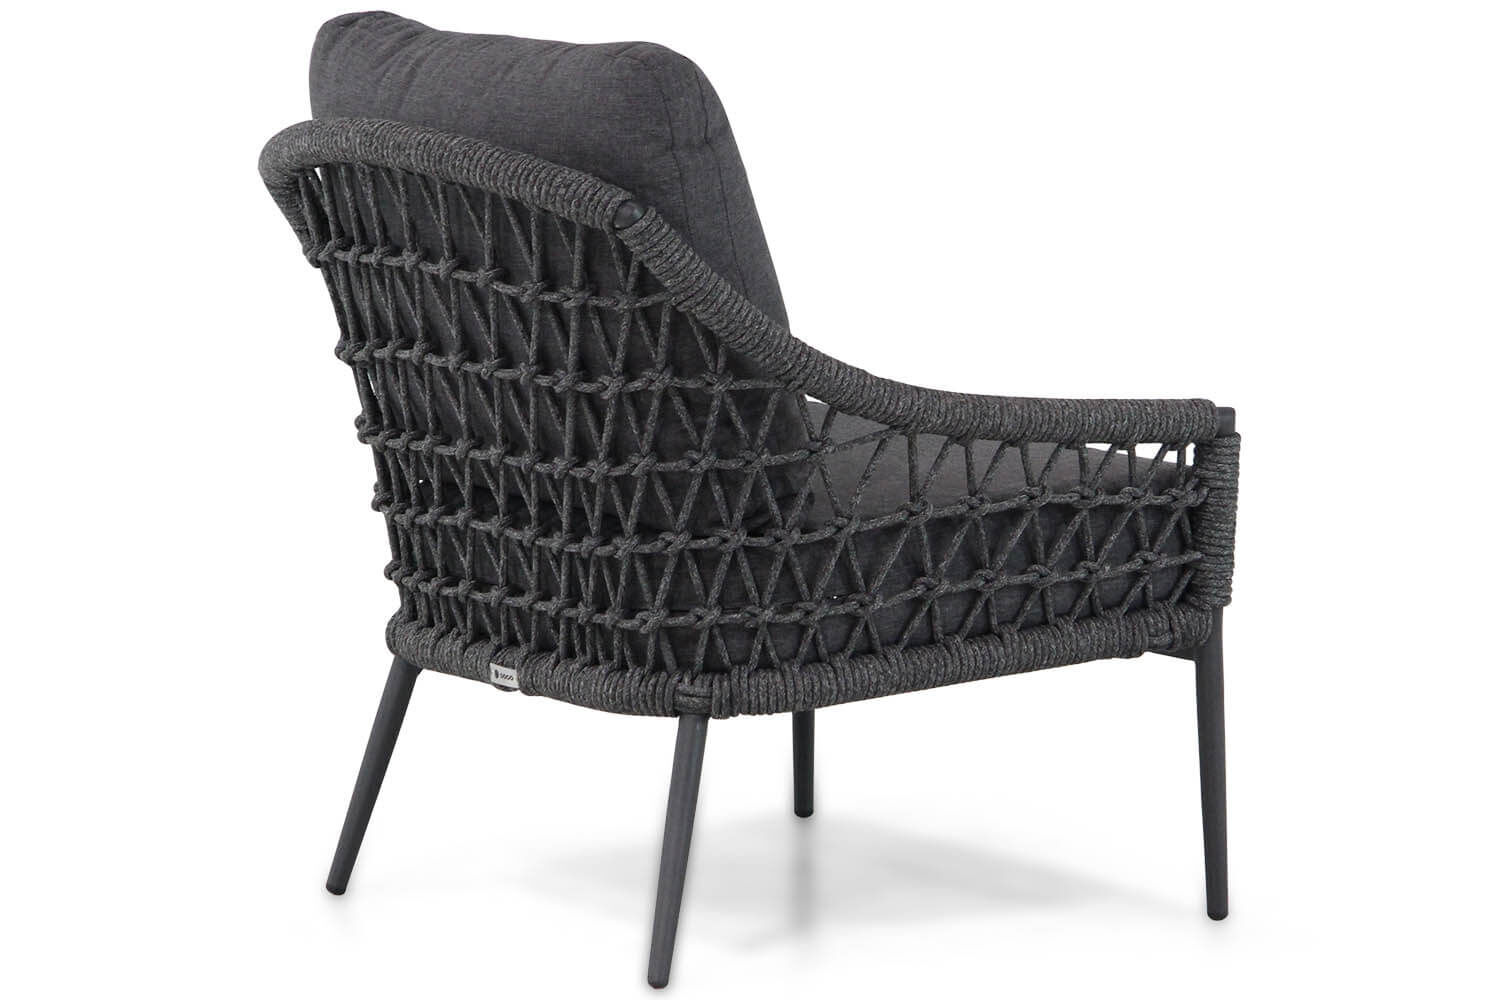 Coco Dalice/Pacific 45-60 cm stoel-bank loungeset 5-delig